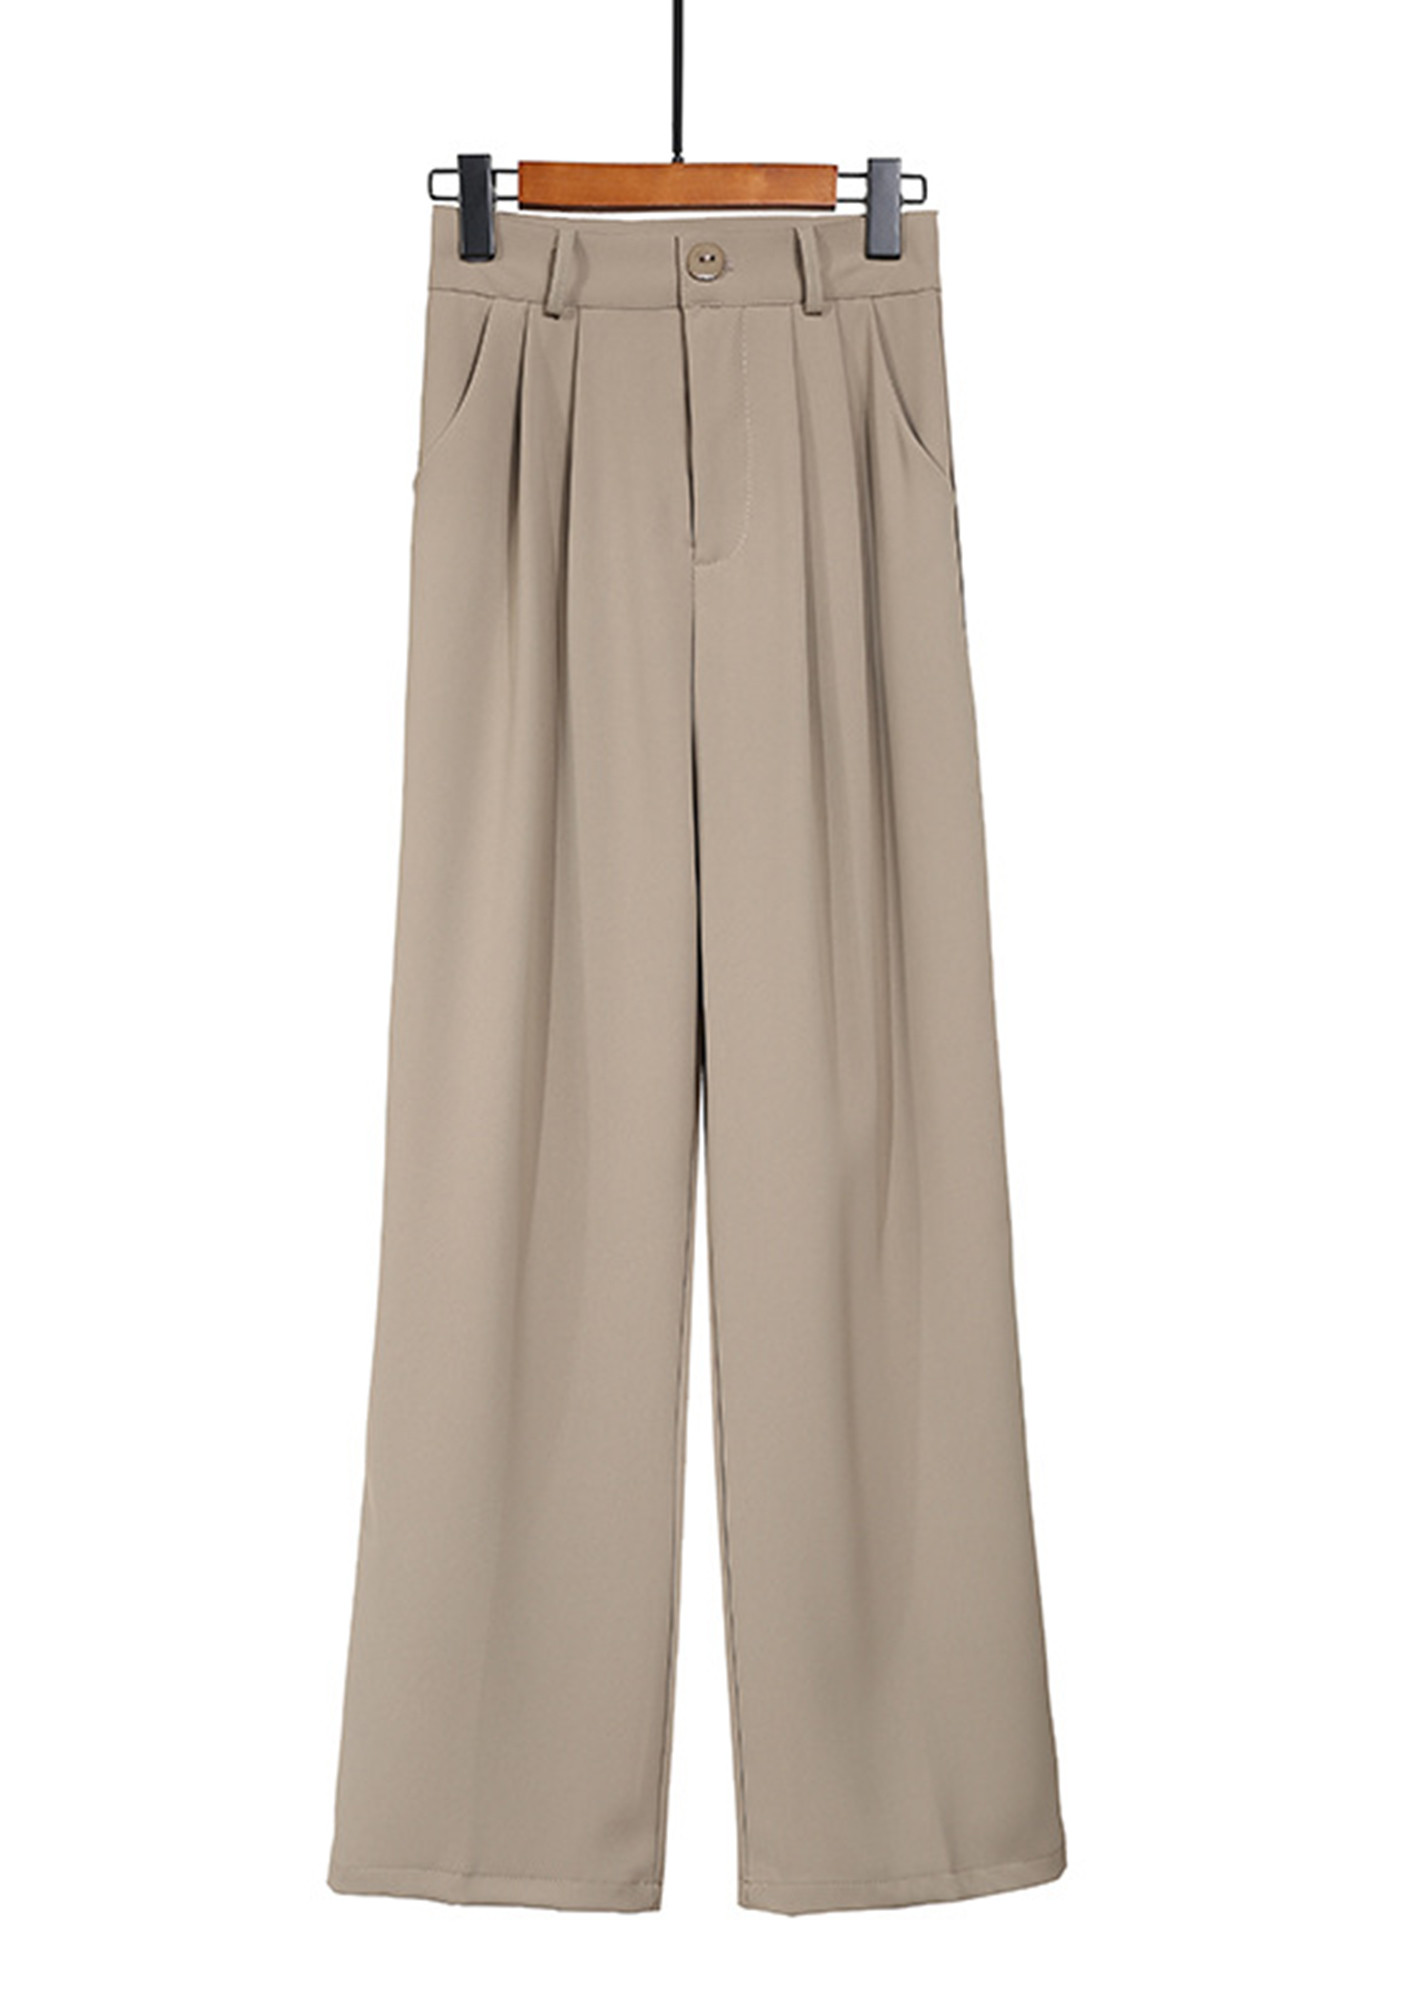 JIUKE Palazzo Pants for Women Dressy Summer Clearance Solid Elegant High  Waist Wide Leg Pants Trousers Flare Trousers Zipper Pants - Walmart.com